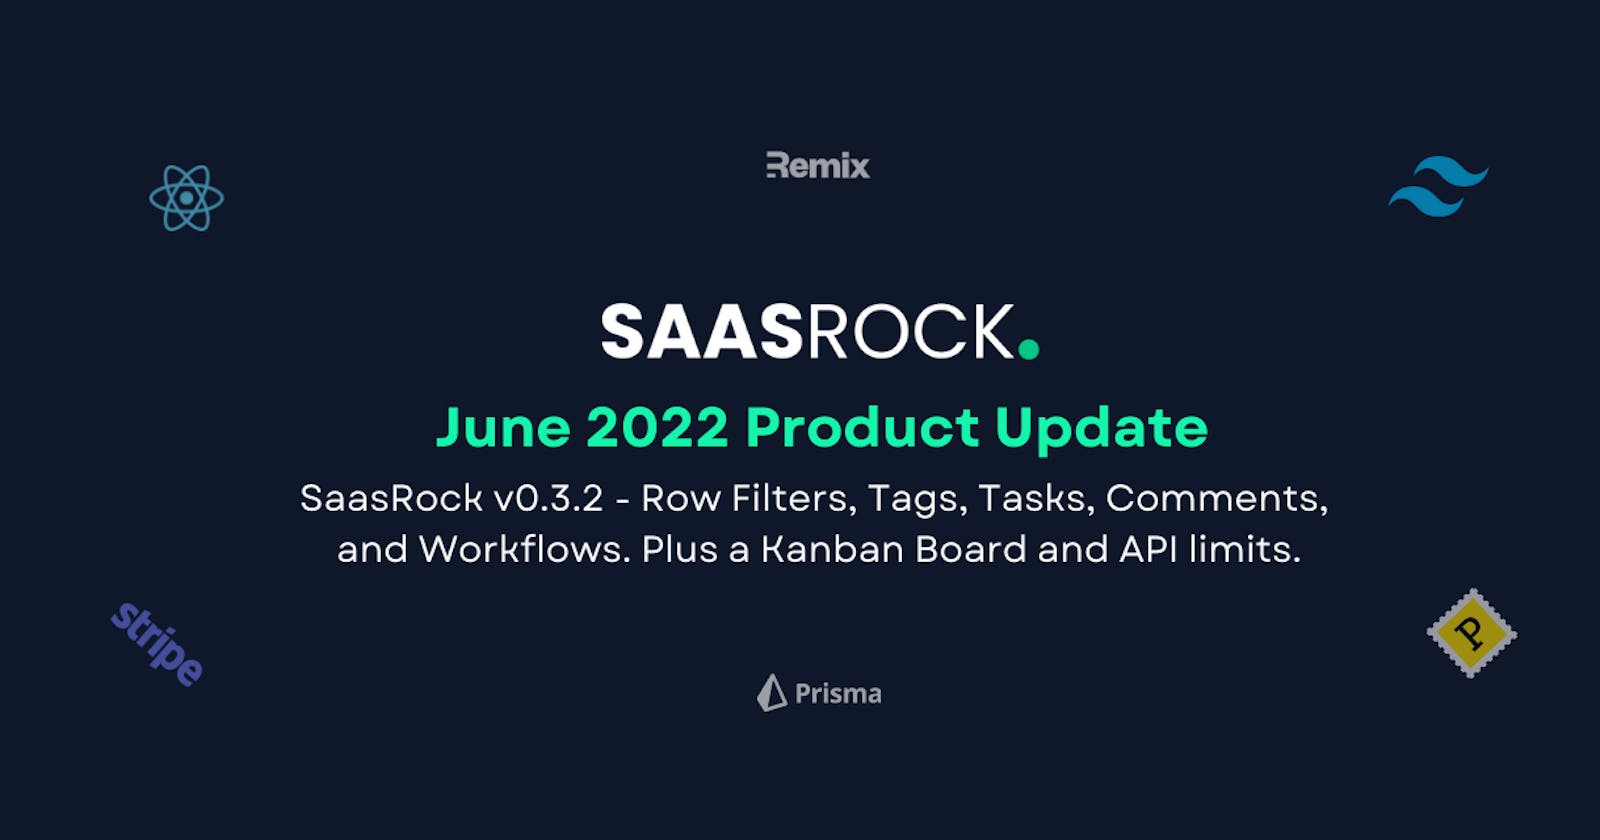 SaasRock v0.3.2 - Row Filters, Tags, Tasks, Comments, Workflows, Kanban Board, and API limits